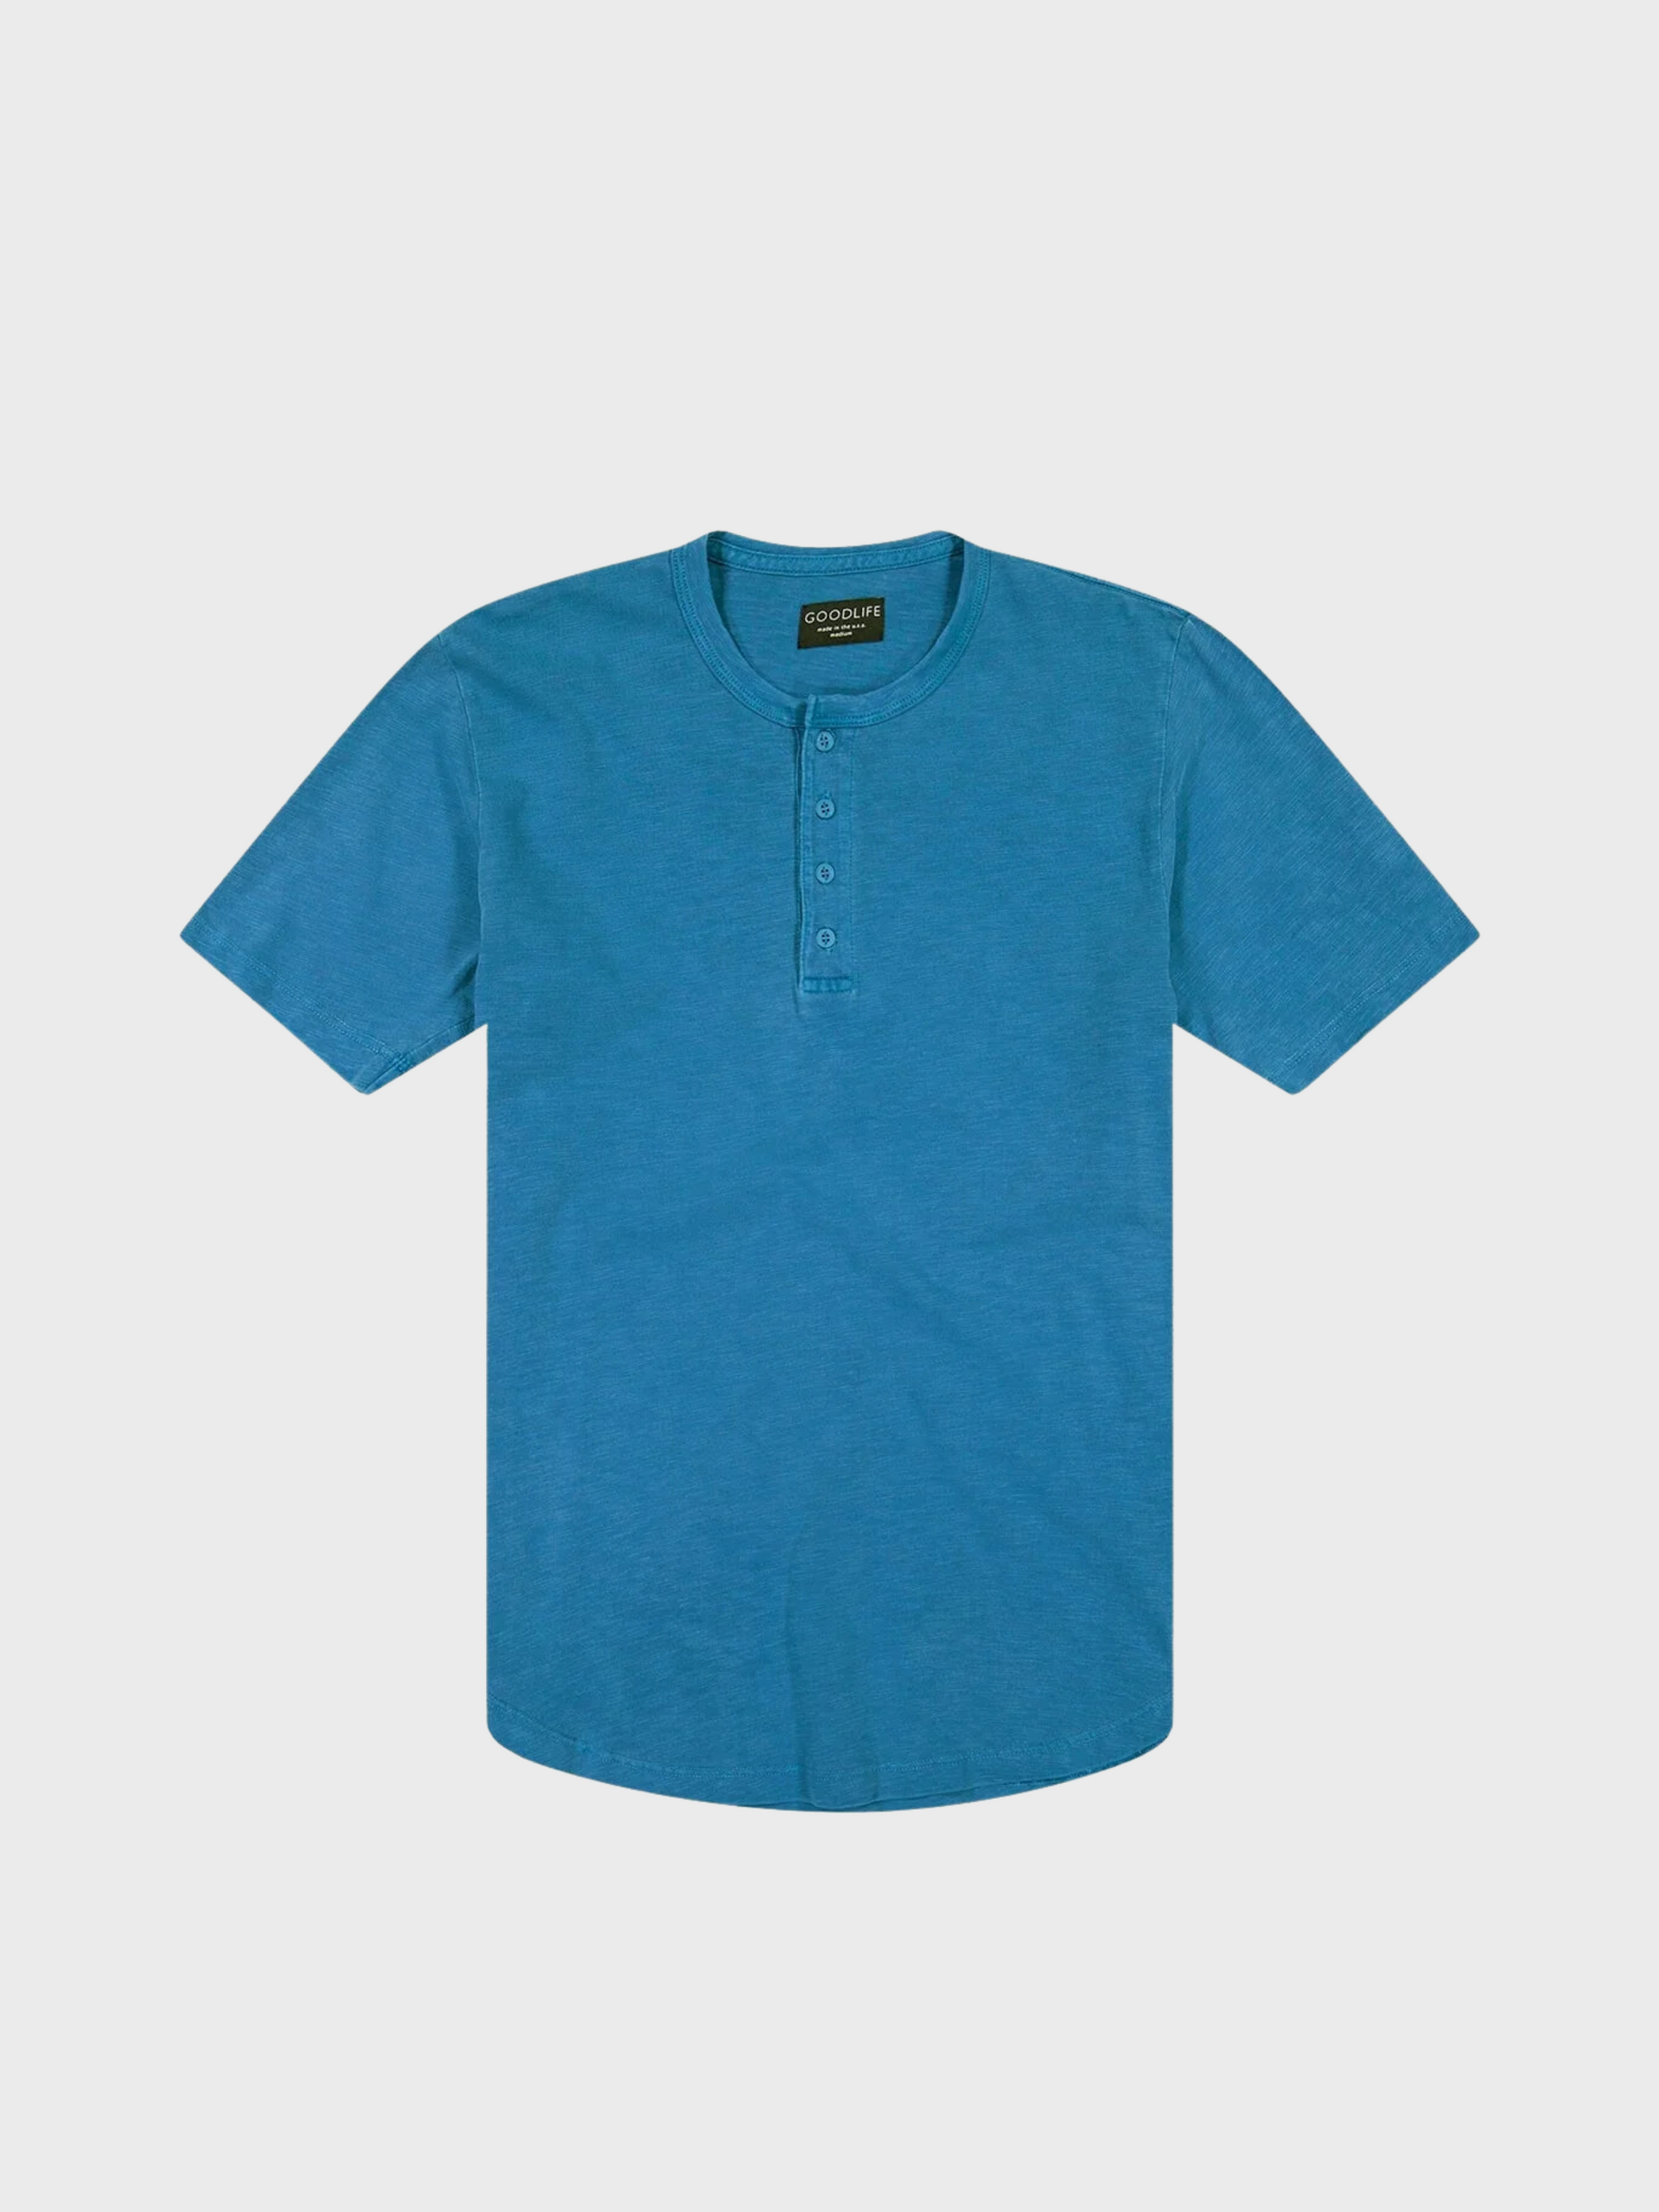 Goodlife Sun Faded Slub Scallop Henley Tee Mykonos Blue-Men&#39;s T-Shirts-Yaletown-Vancouver-Surrey-Canada